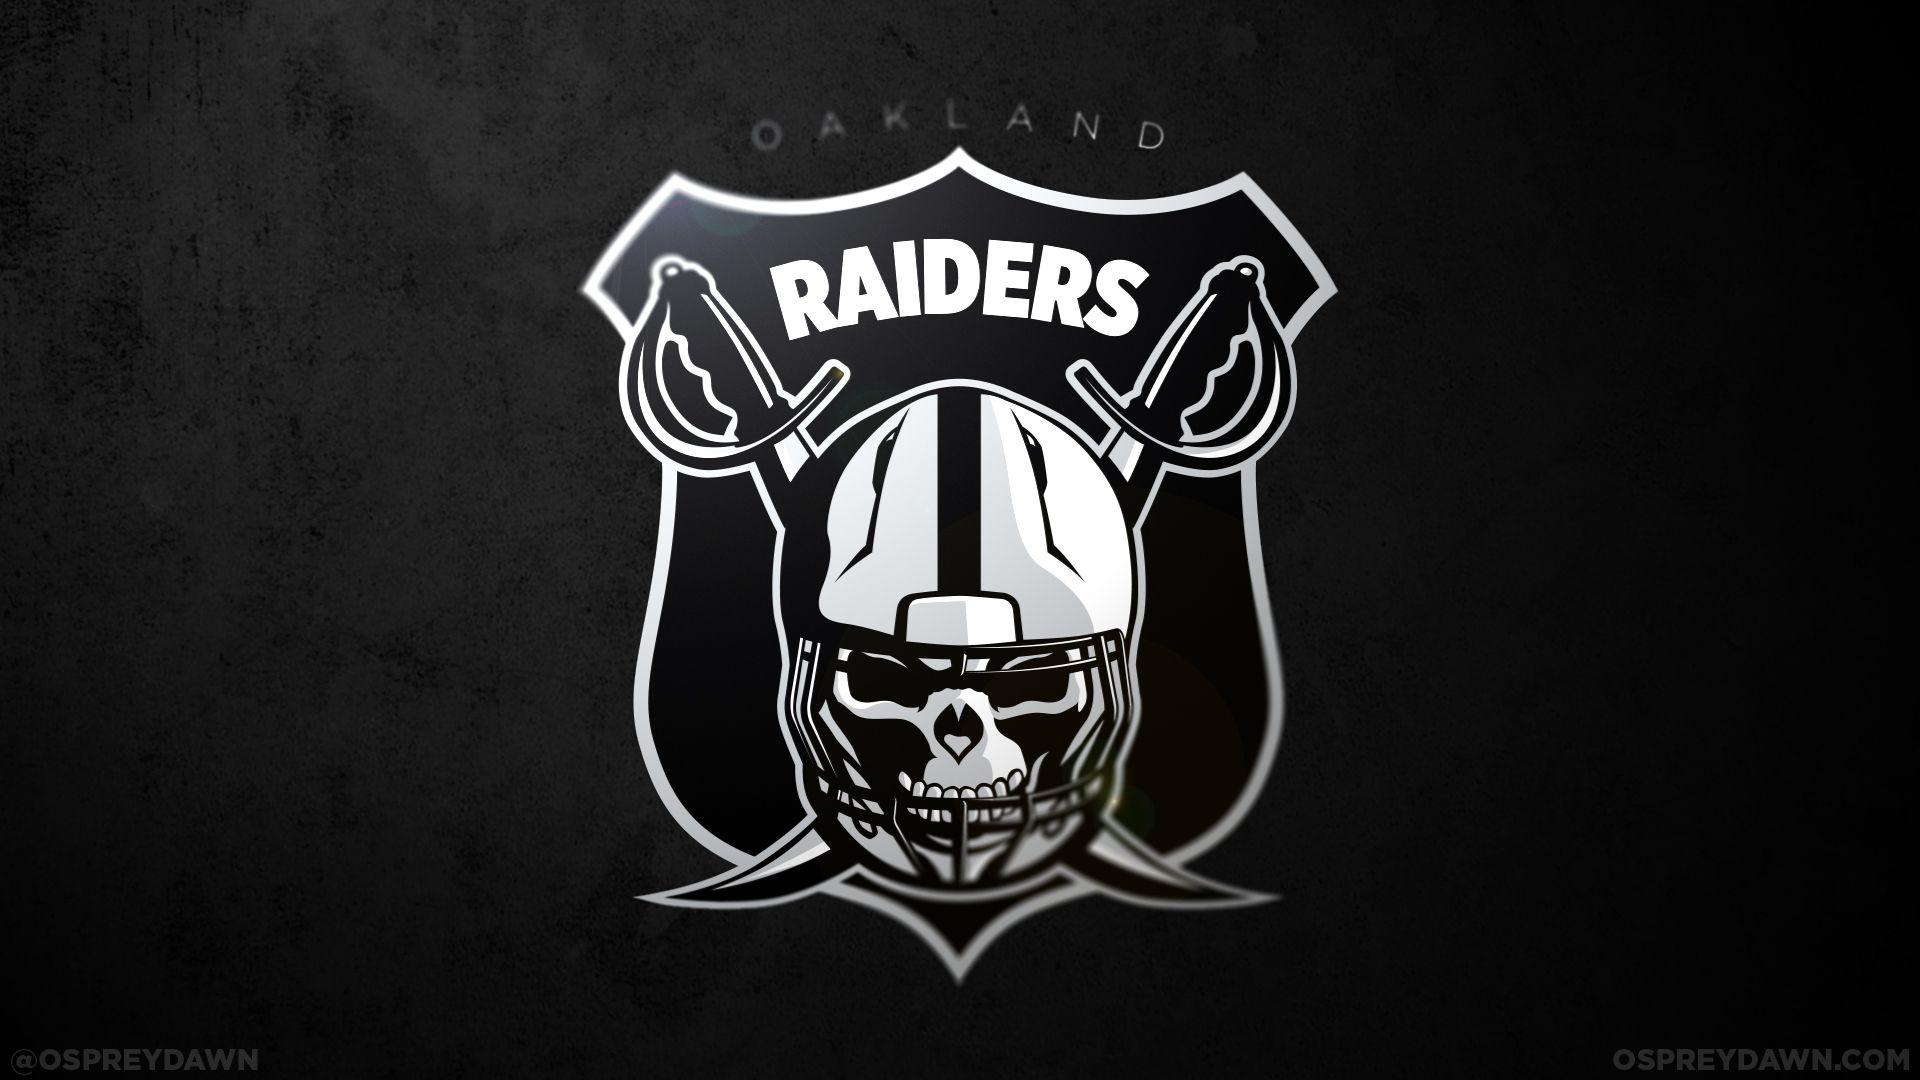 Awesome Oakland Raiders Pics. Oakland Raiders Wallpaper